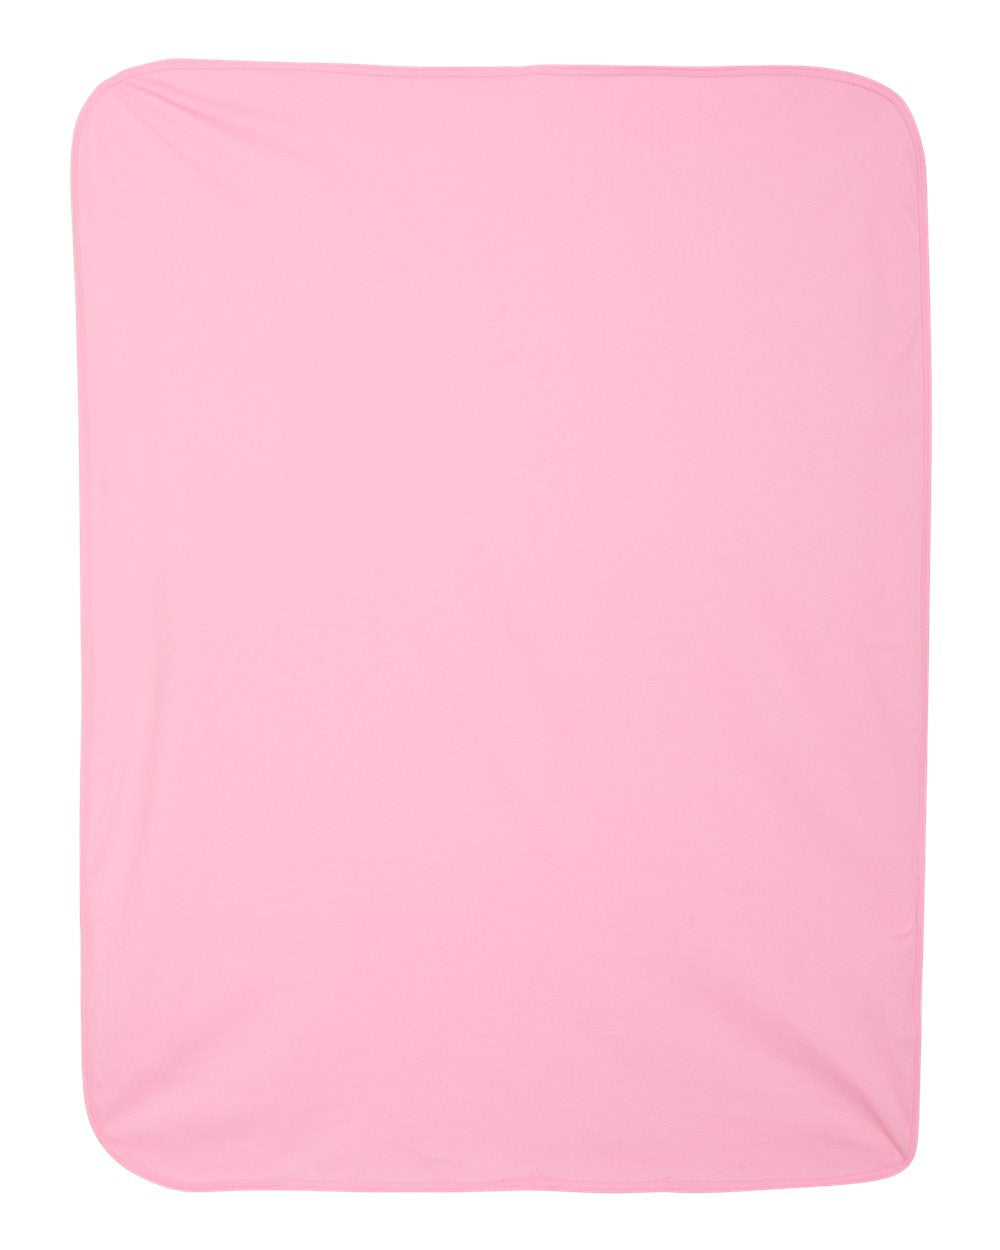 rabbit skins premium jersey infant blanket pink